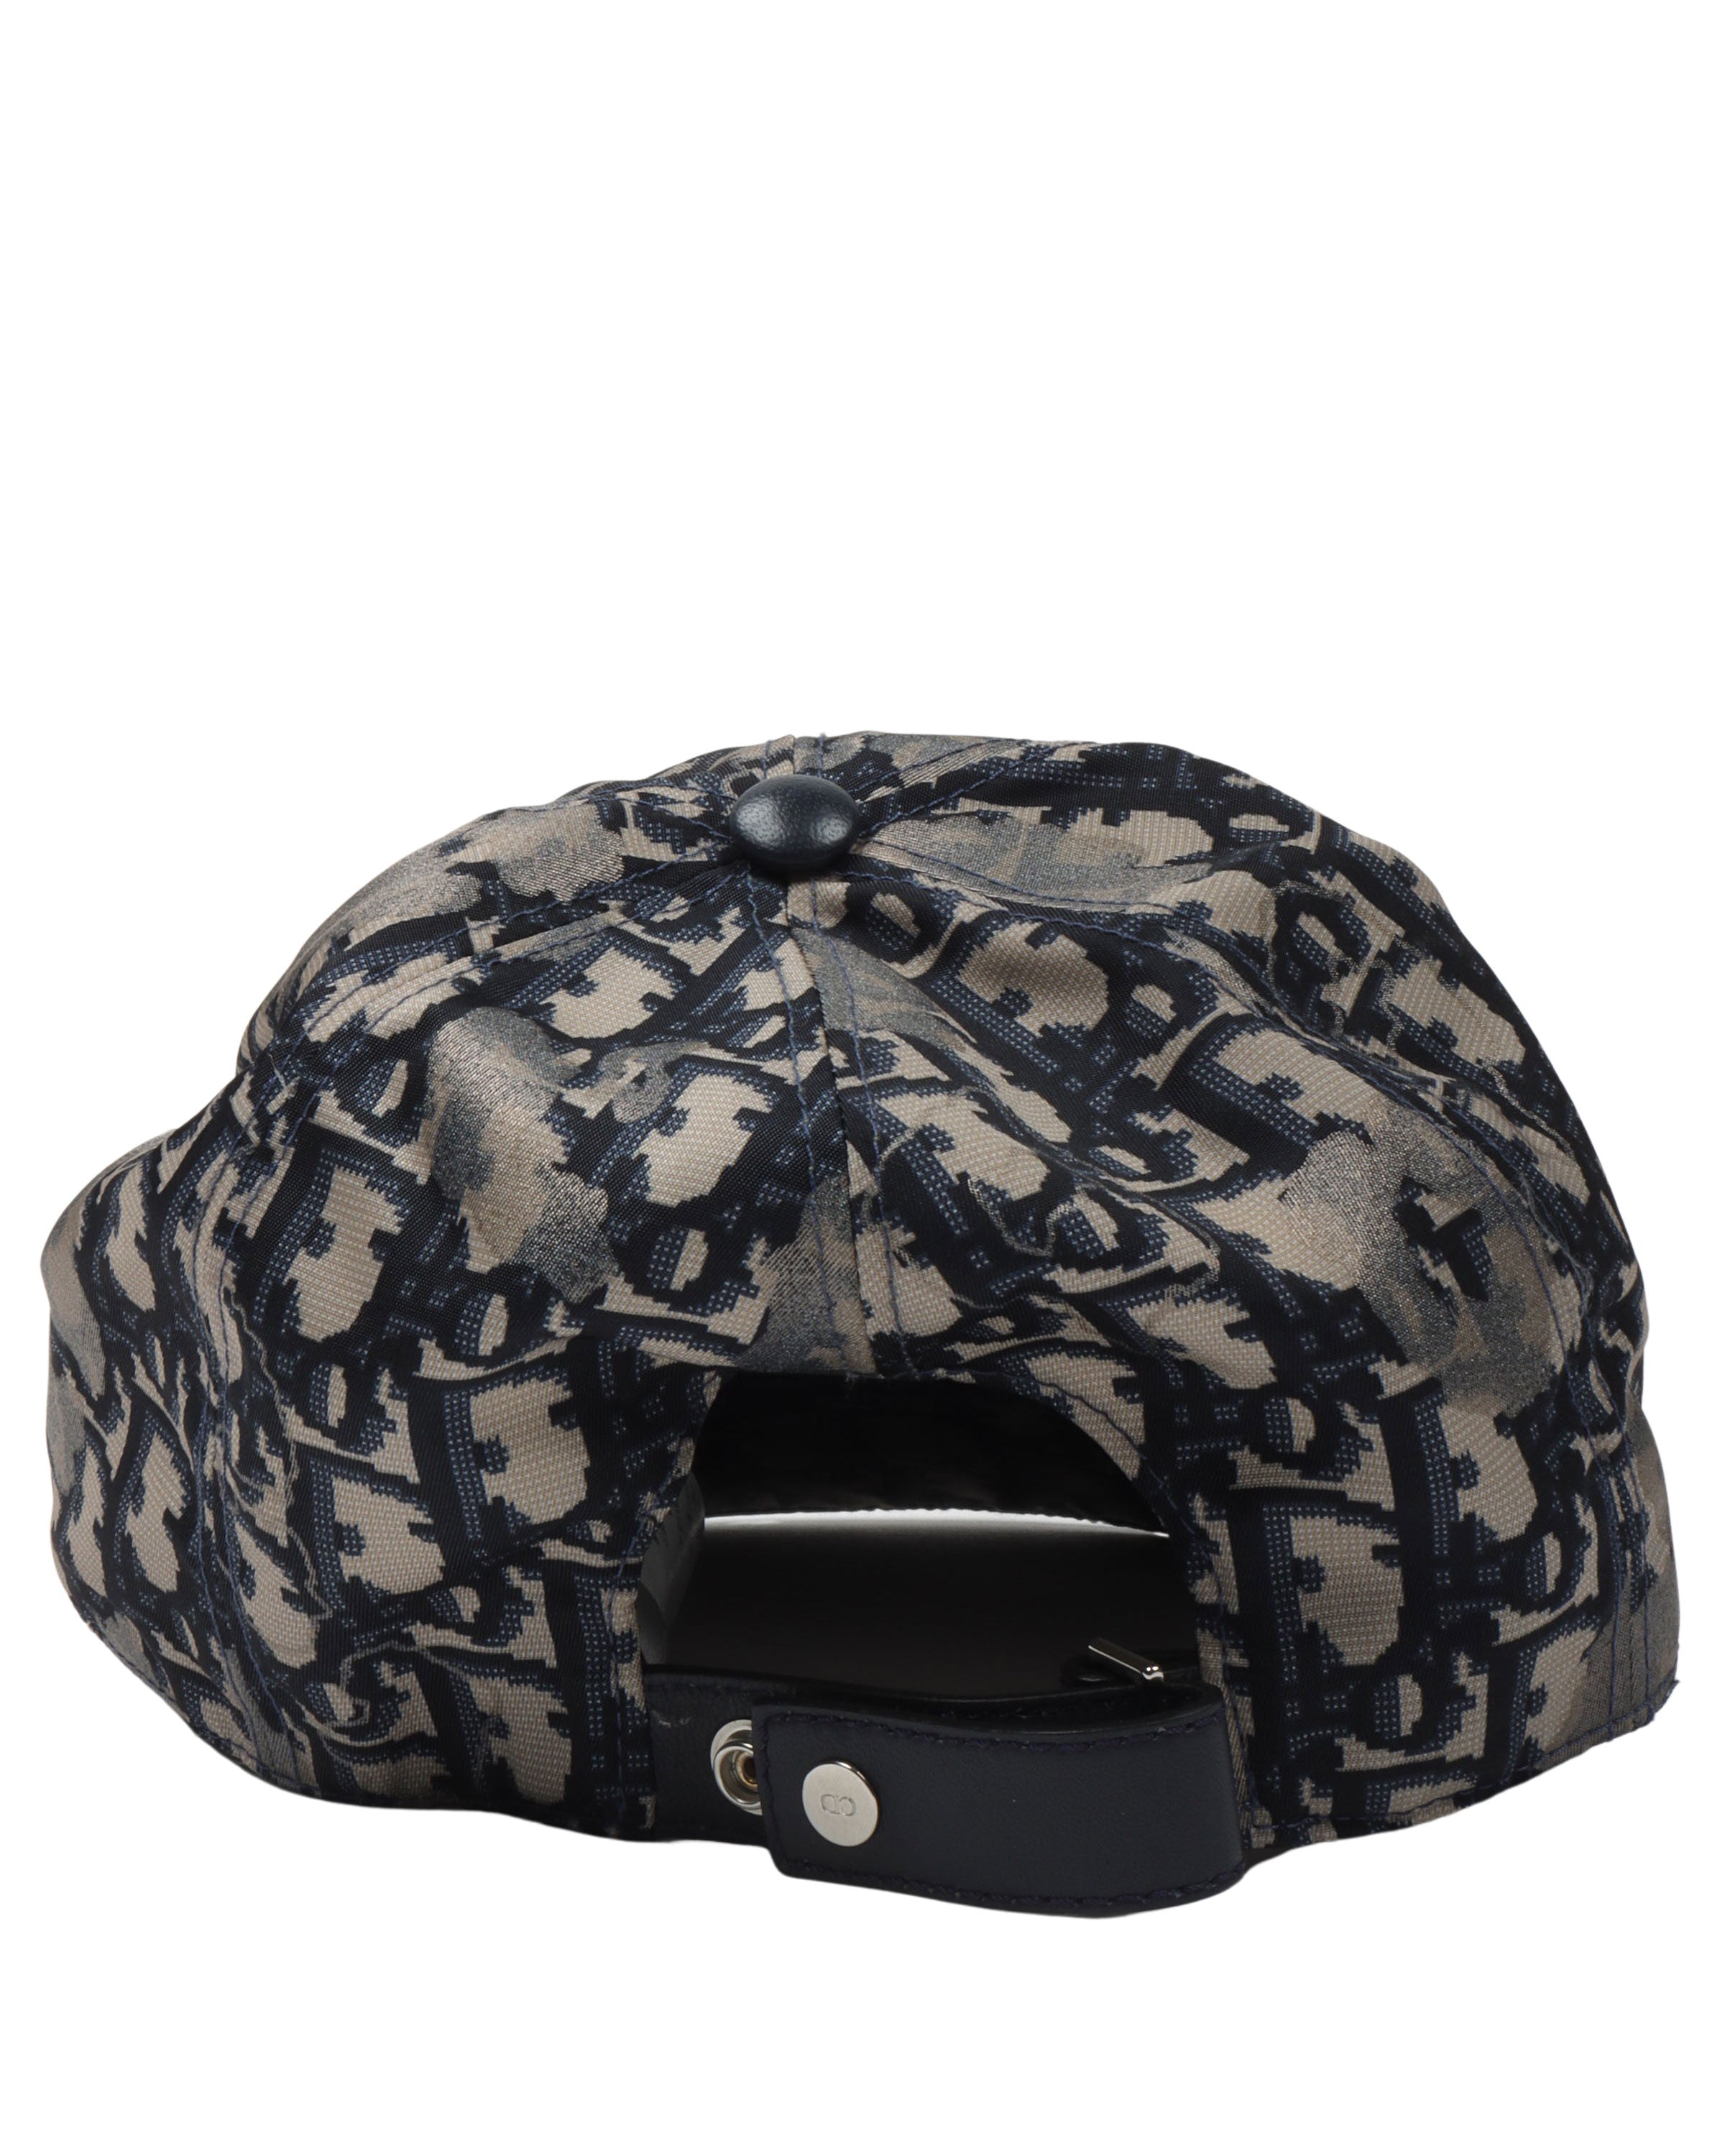 Louis Vuitton Nigo Hat - 3 For Sale on 1stDibs